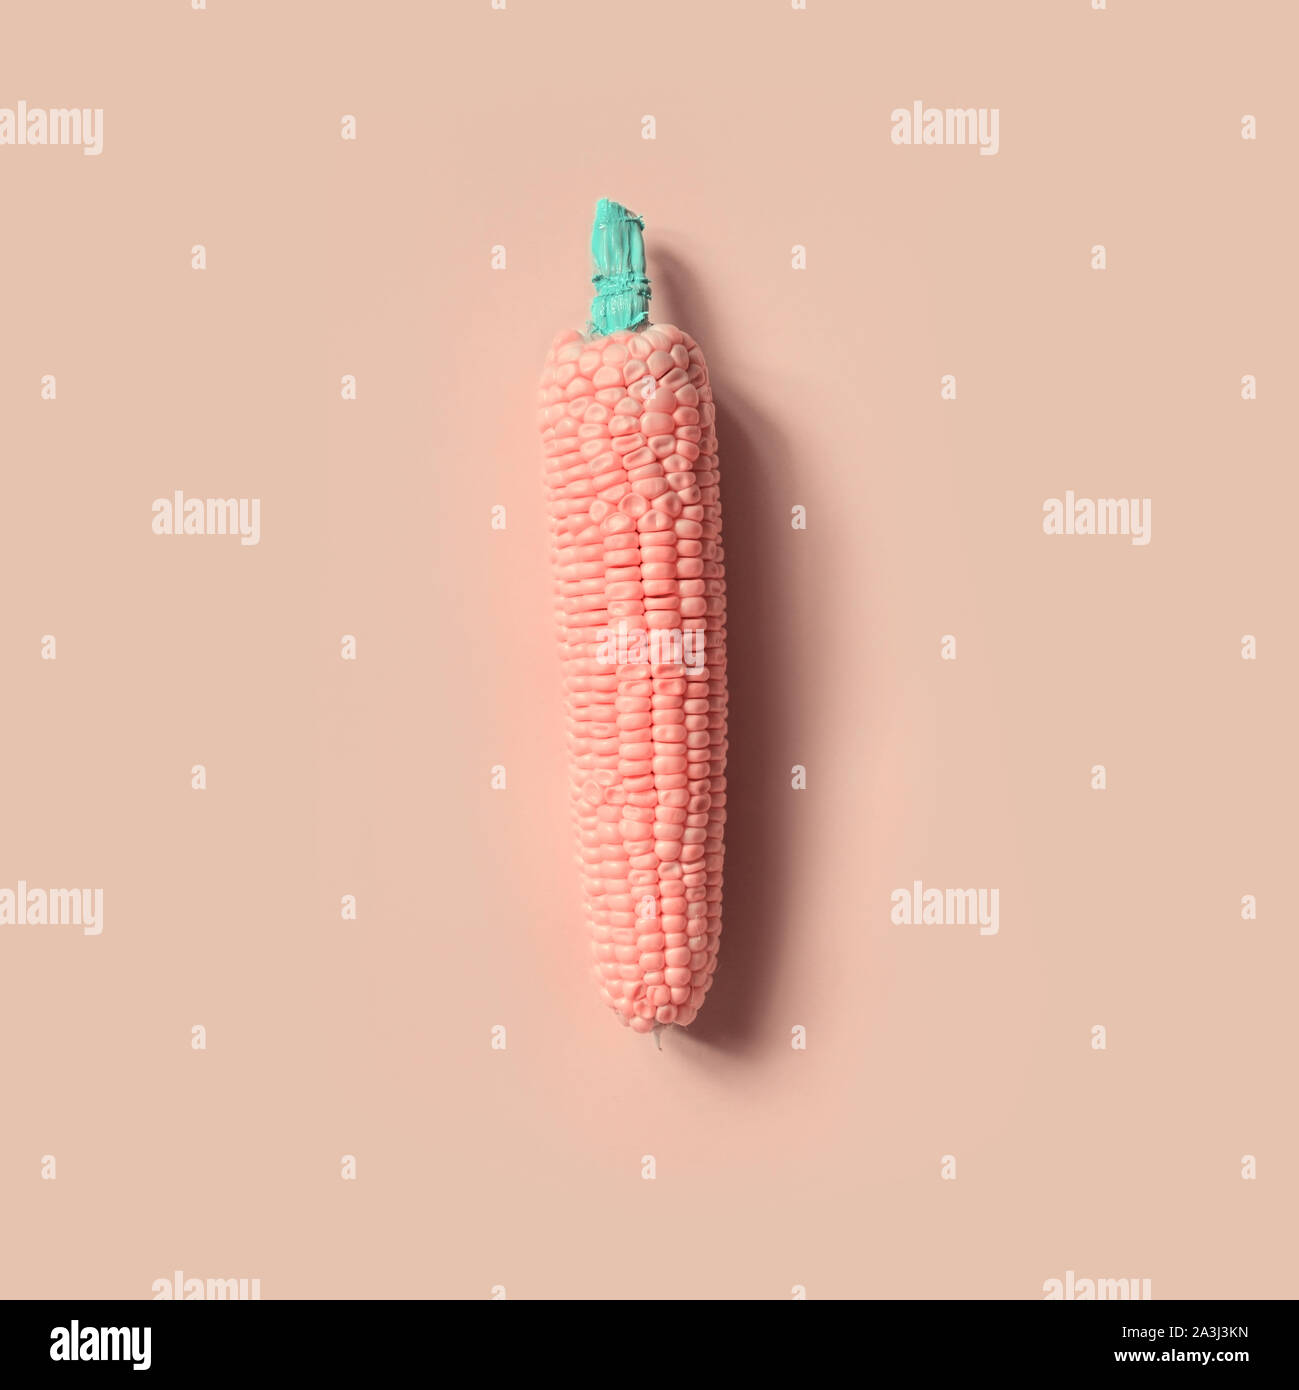 Corn pastel vanilla on pink background. Minimal flat lay concept. Fashion food concept. Stock Photo